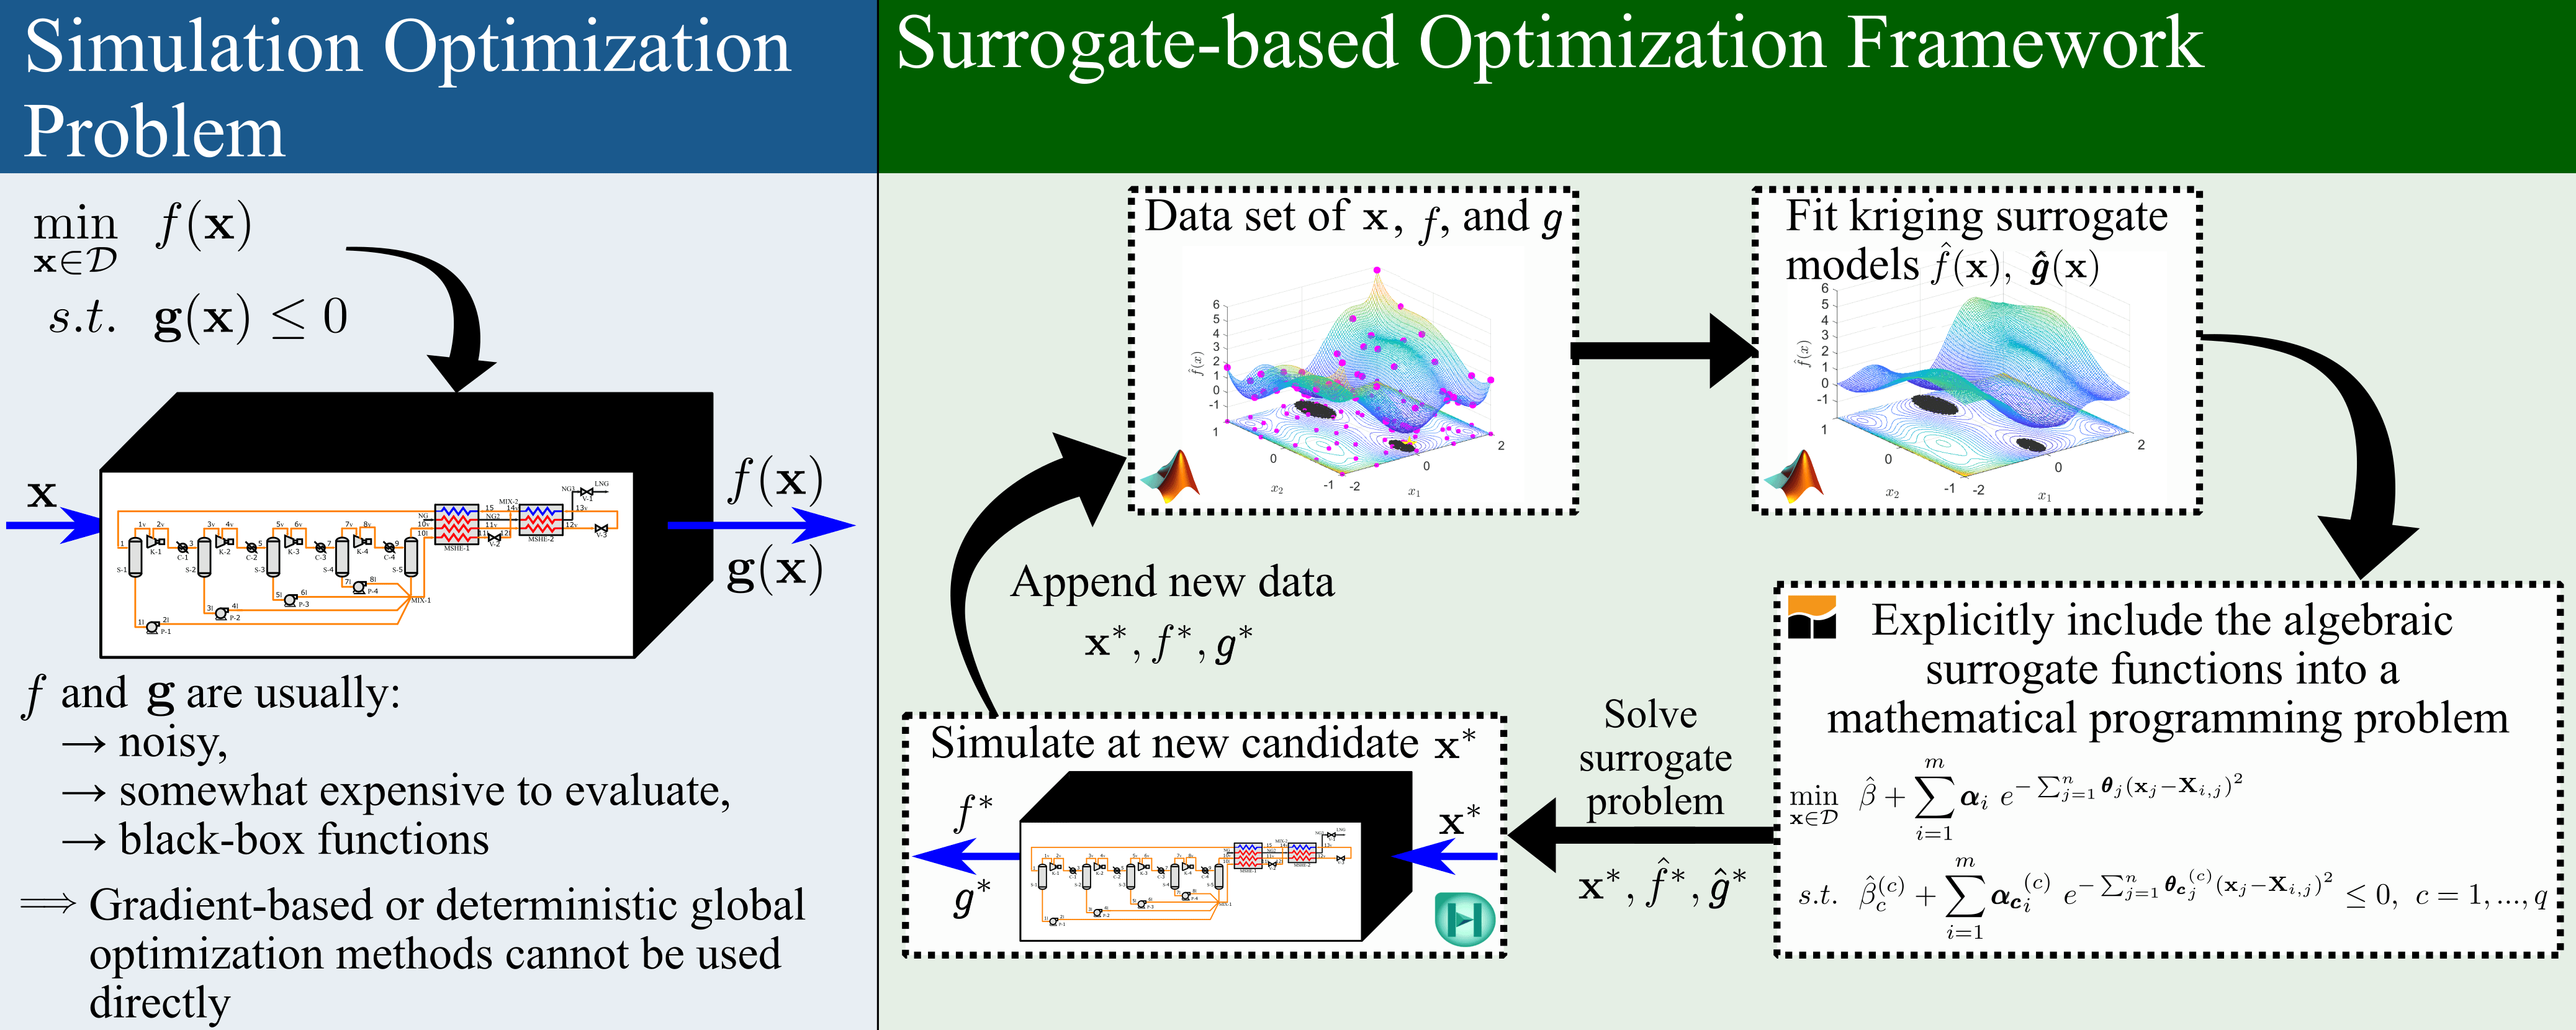 Surrogate-based simulation optimization